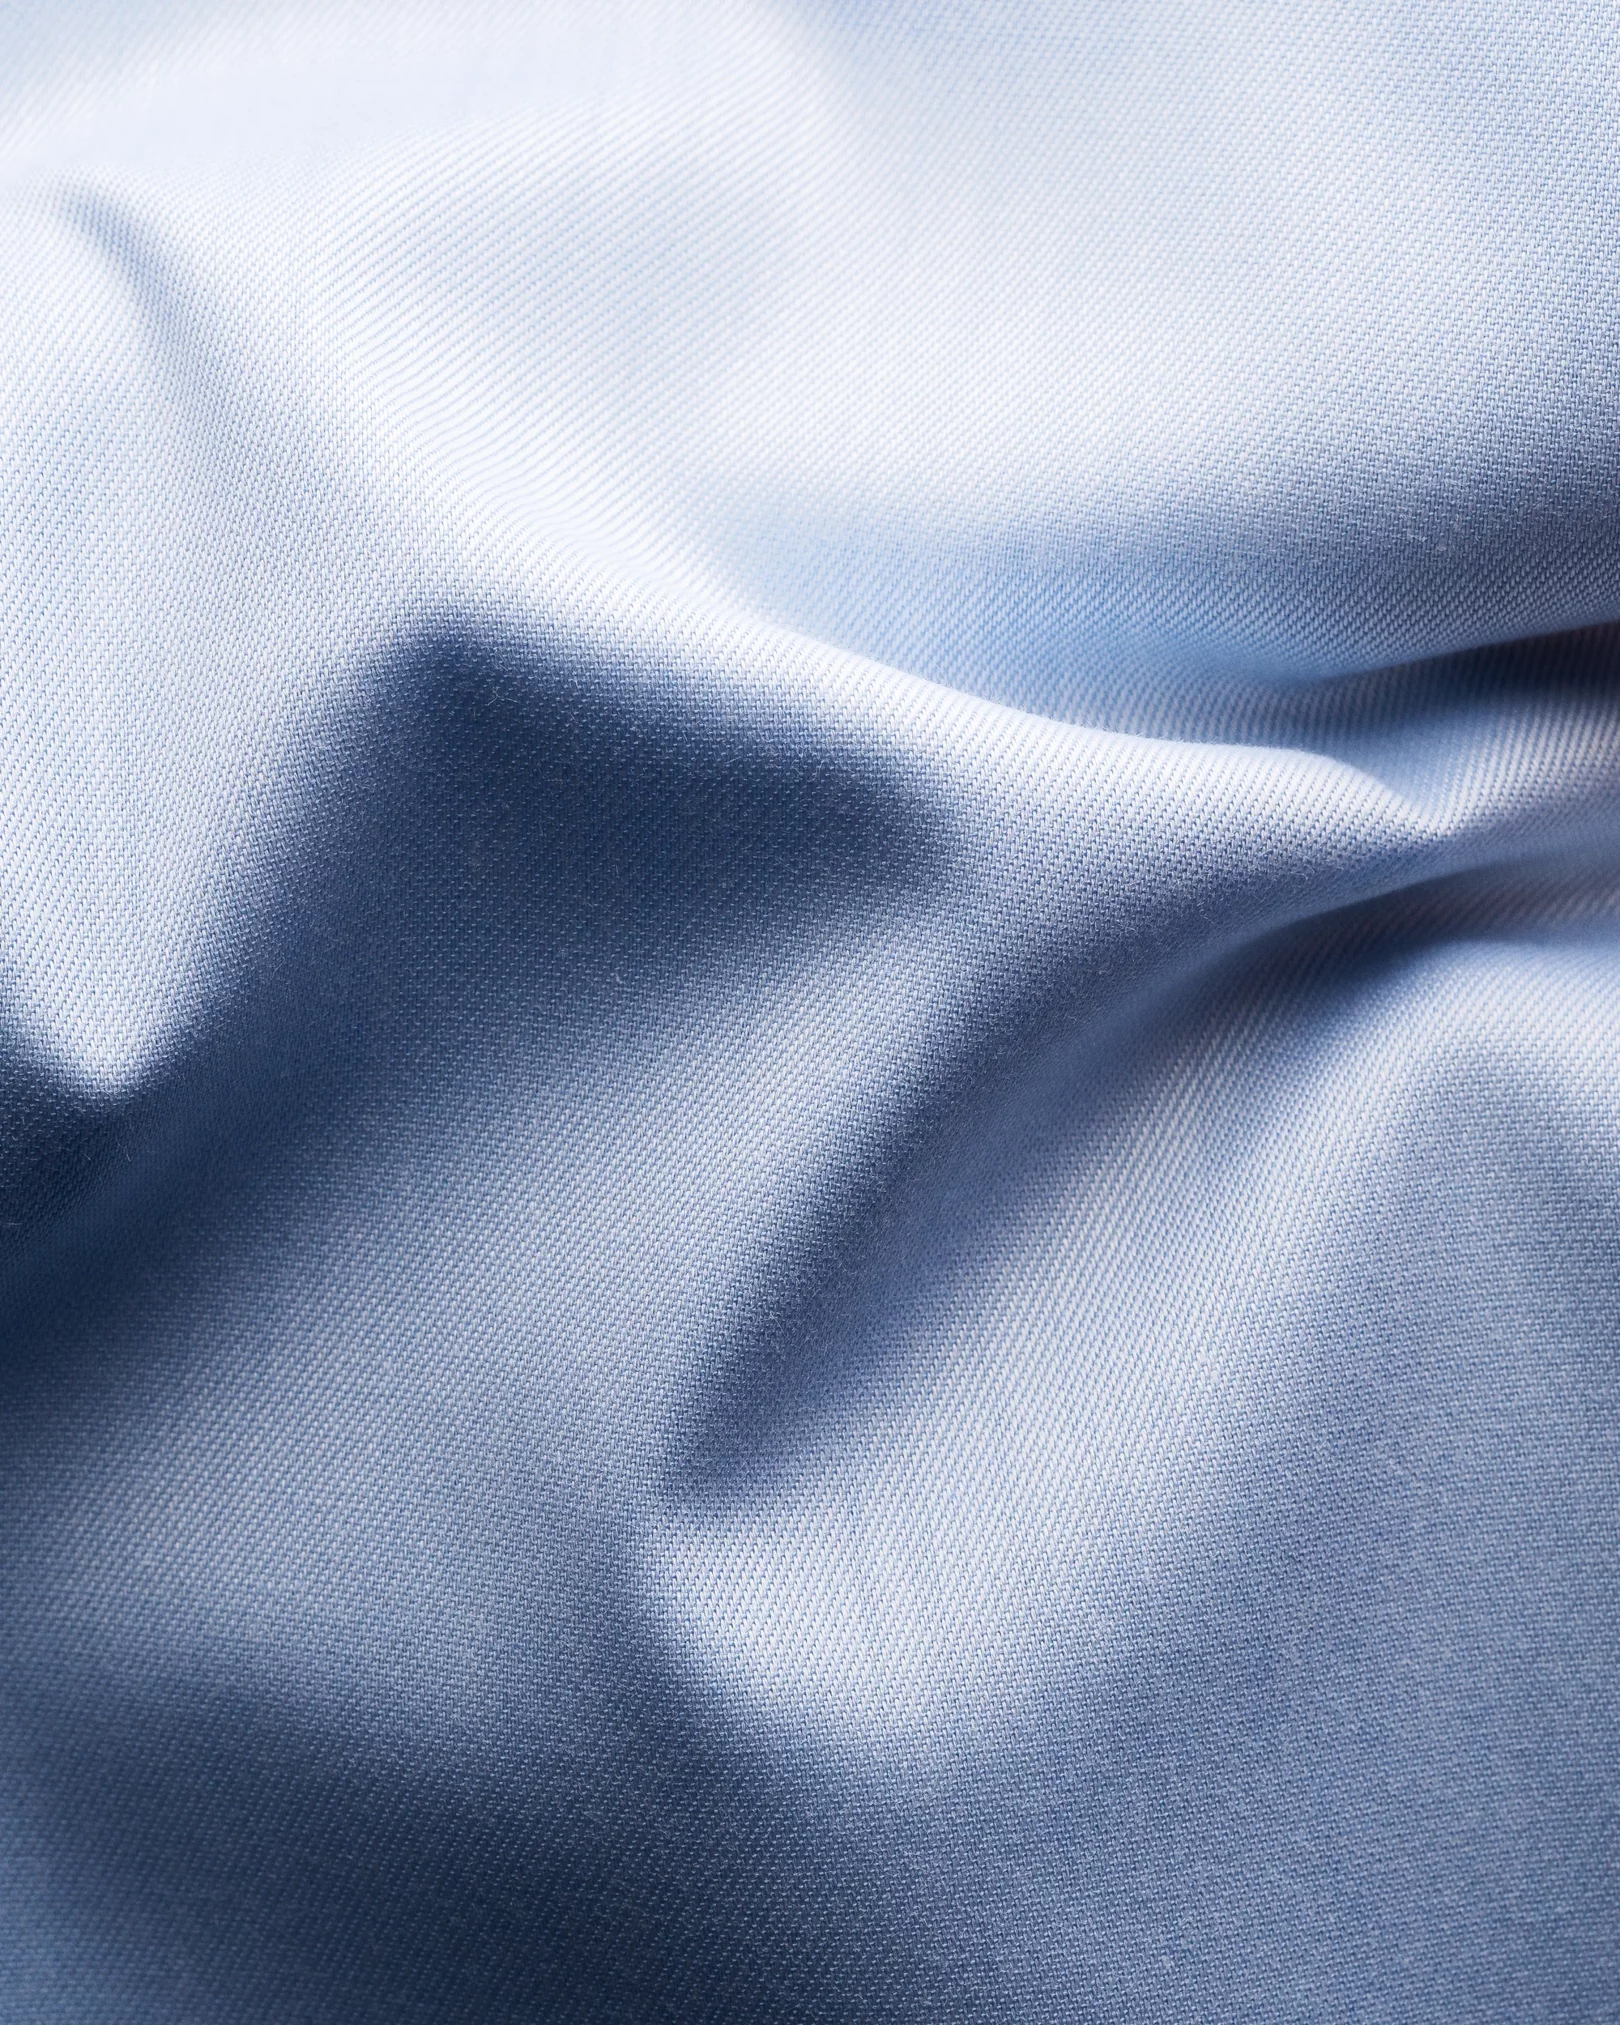 Eton - light blue crease resistant signature twill